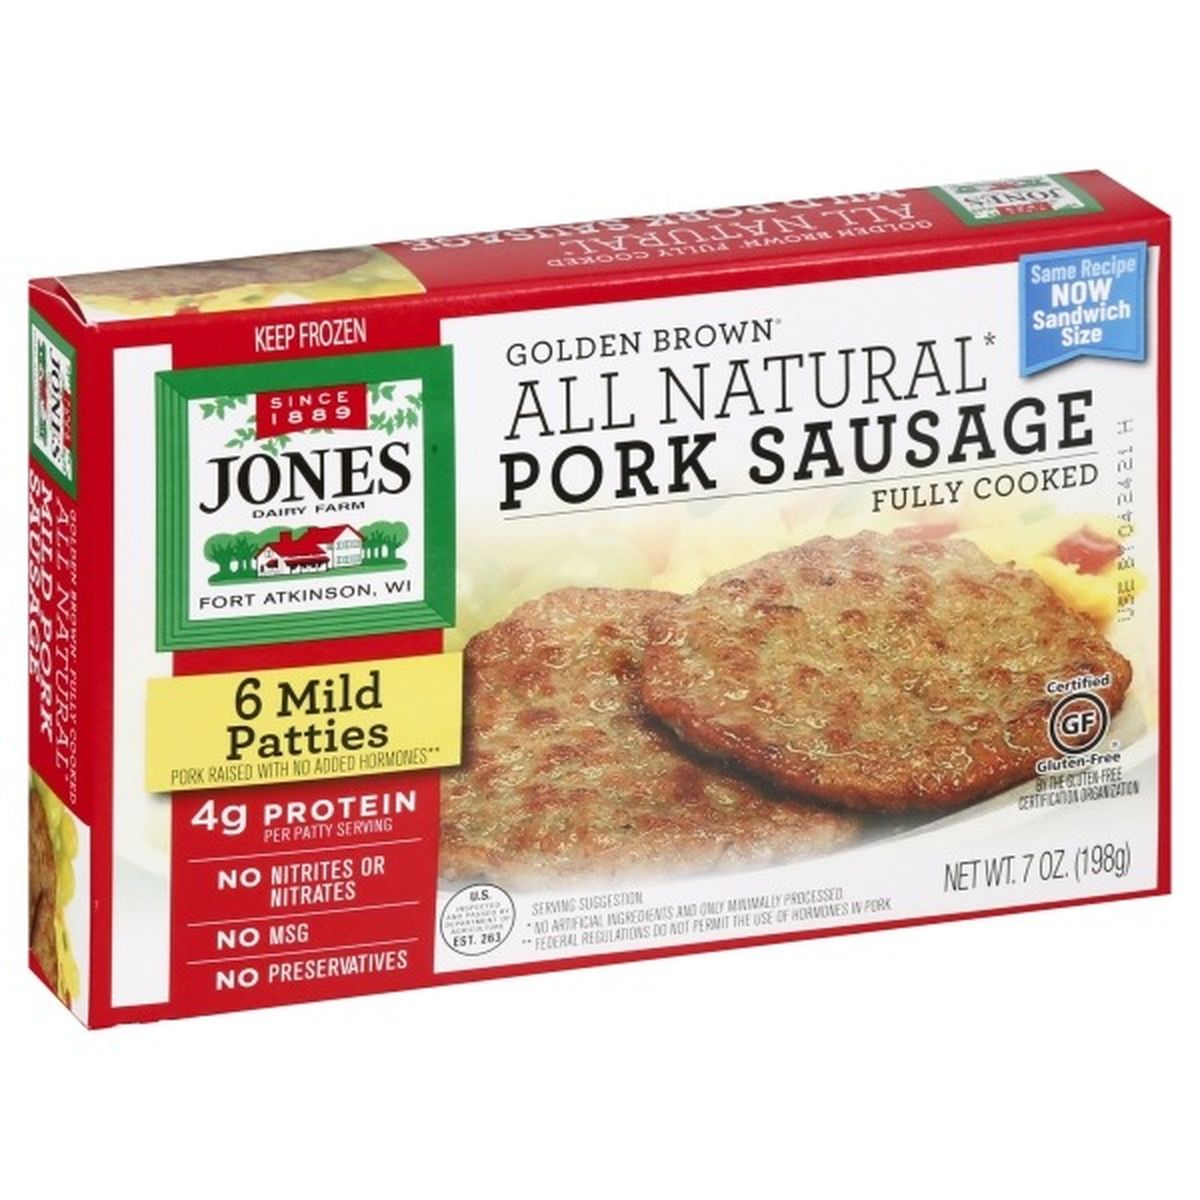 Calories in Jones Dairy Farm Golden Brown Pork Sausage Patties, Mild, Sandwich Size